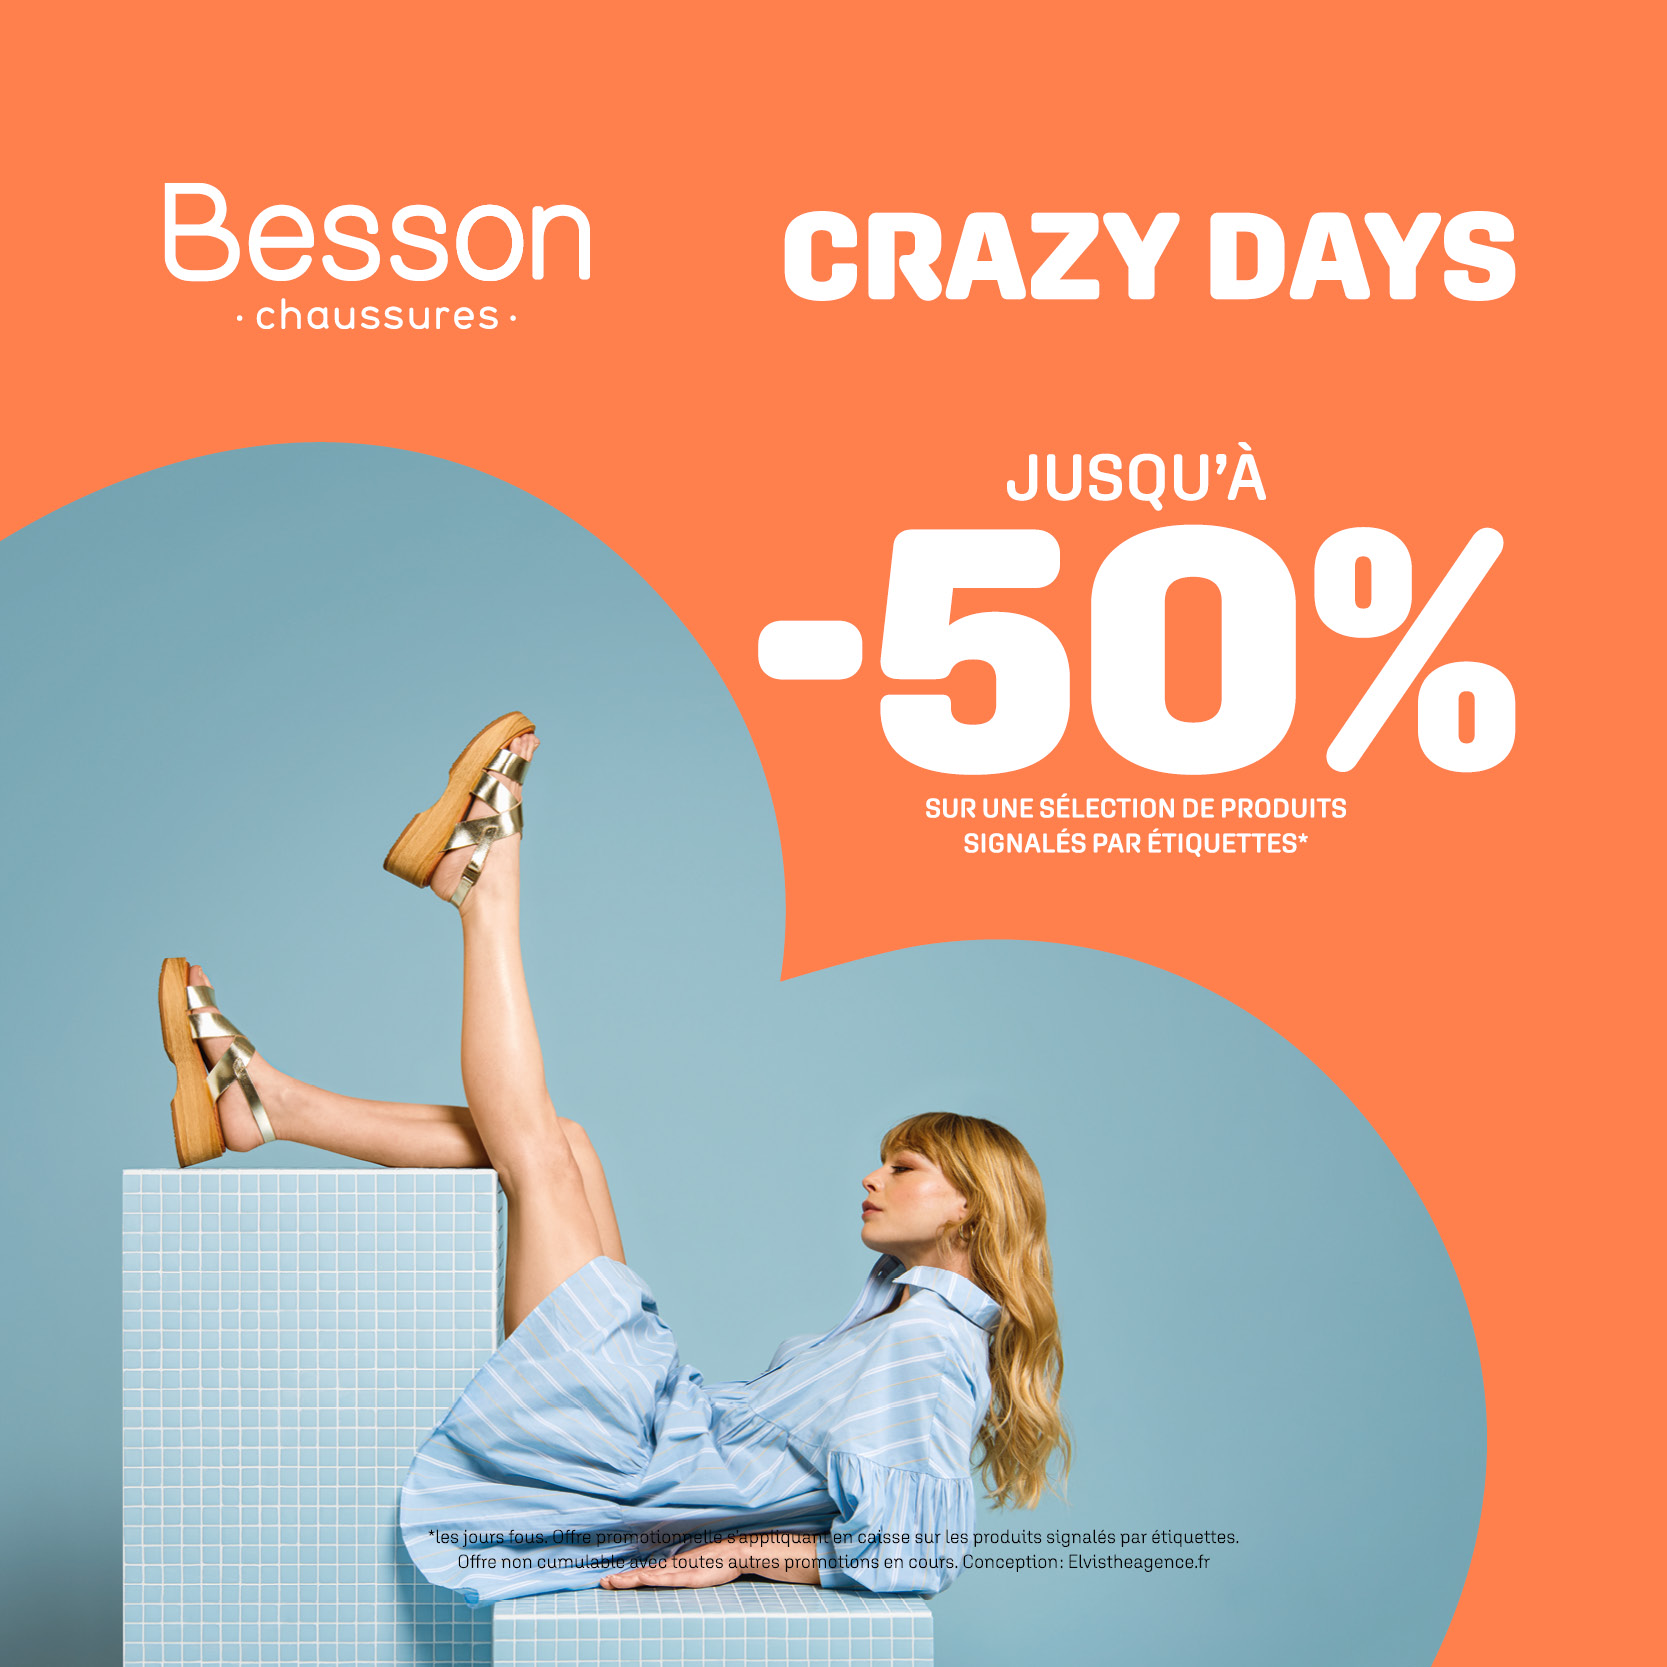 Be Green - Saint Parres - Crazy days ! - besson chaussures crazy days - 1